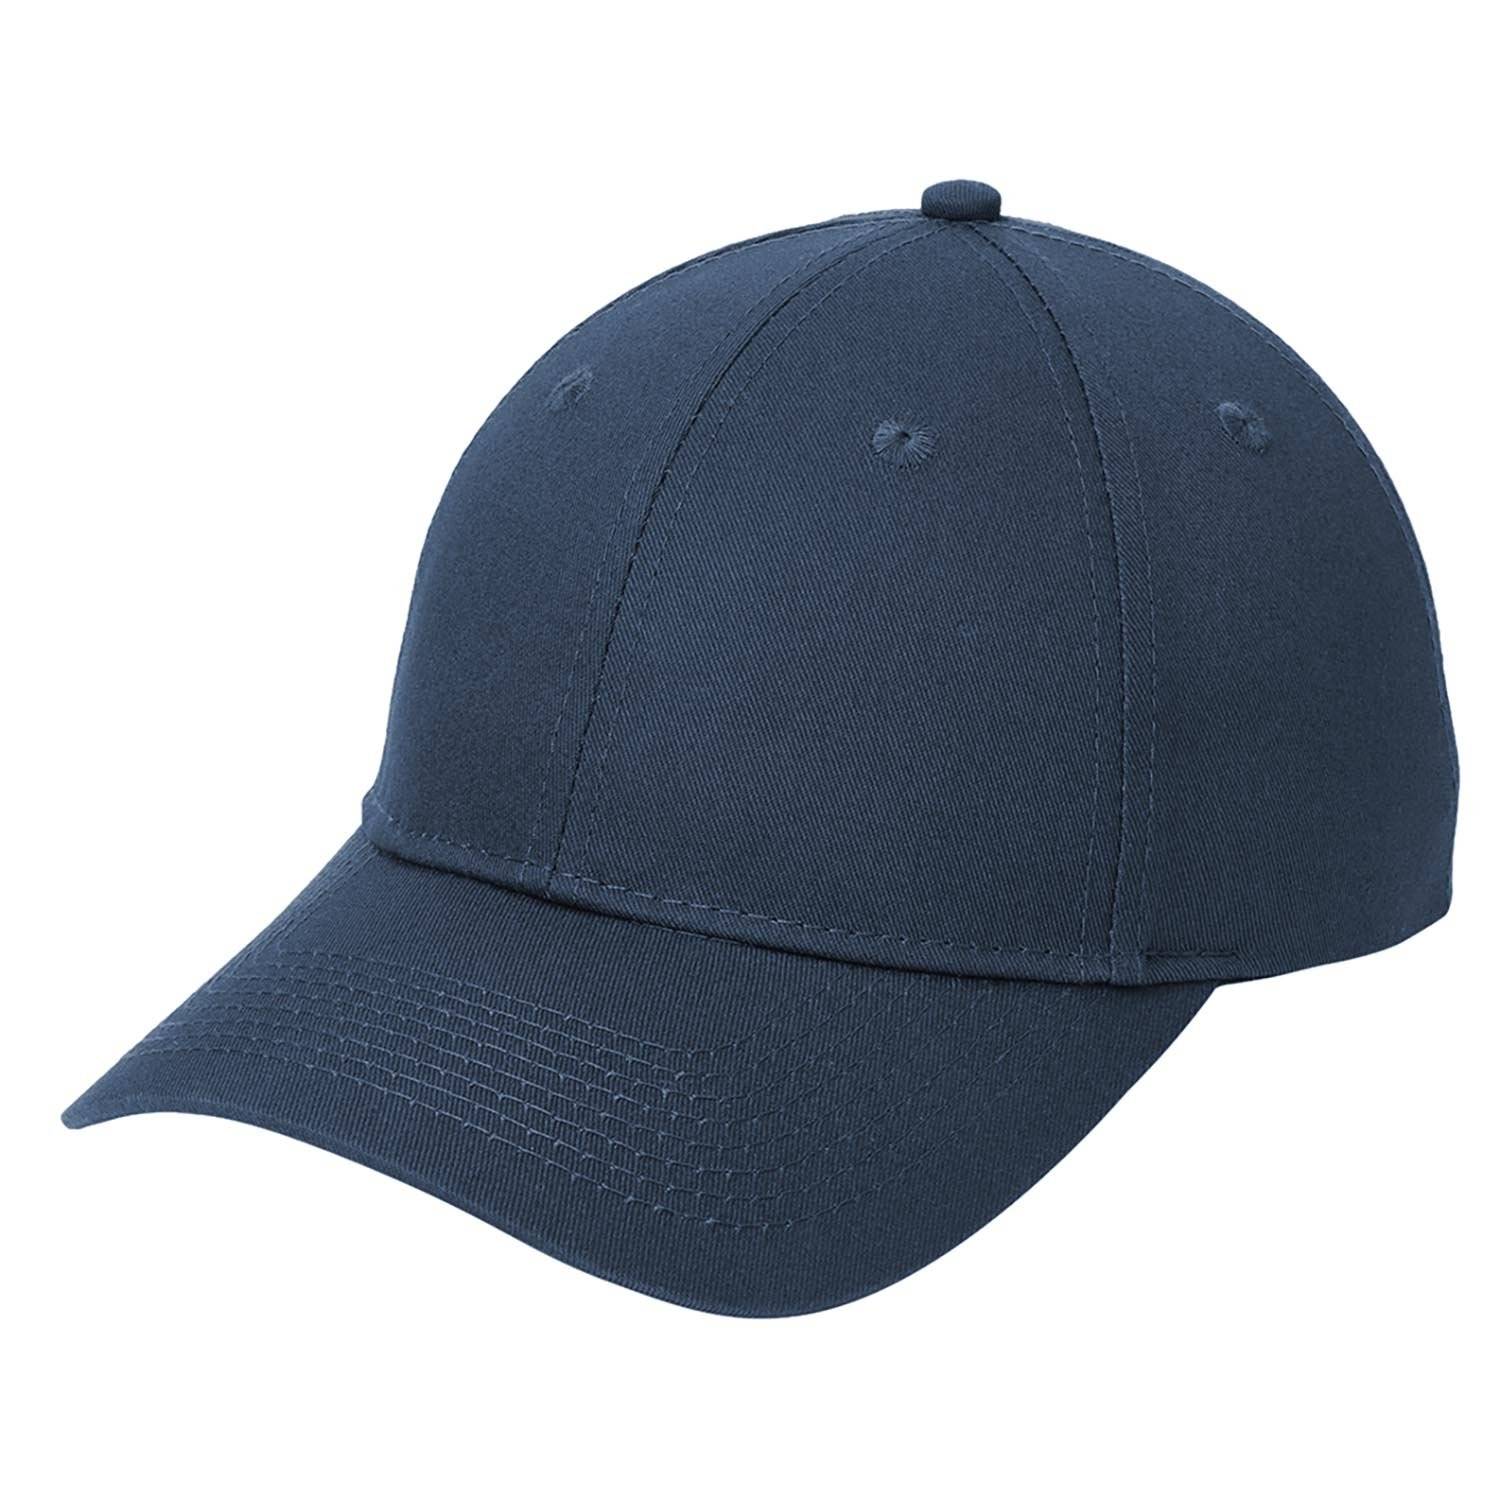 PORT & COMPANY SIX-PANEL TWILL CAP